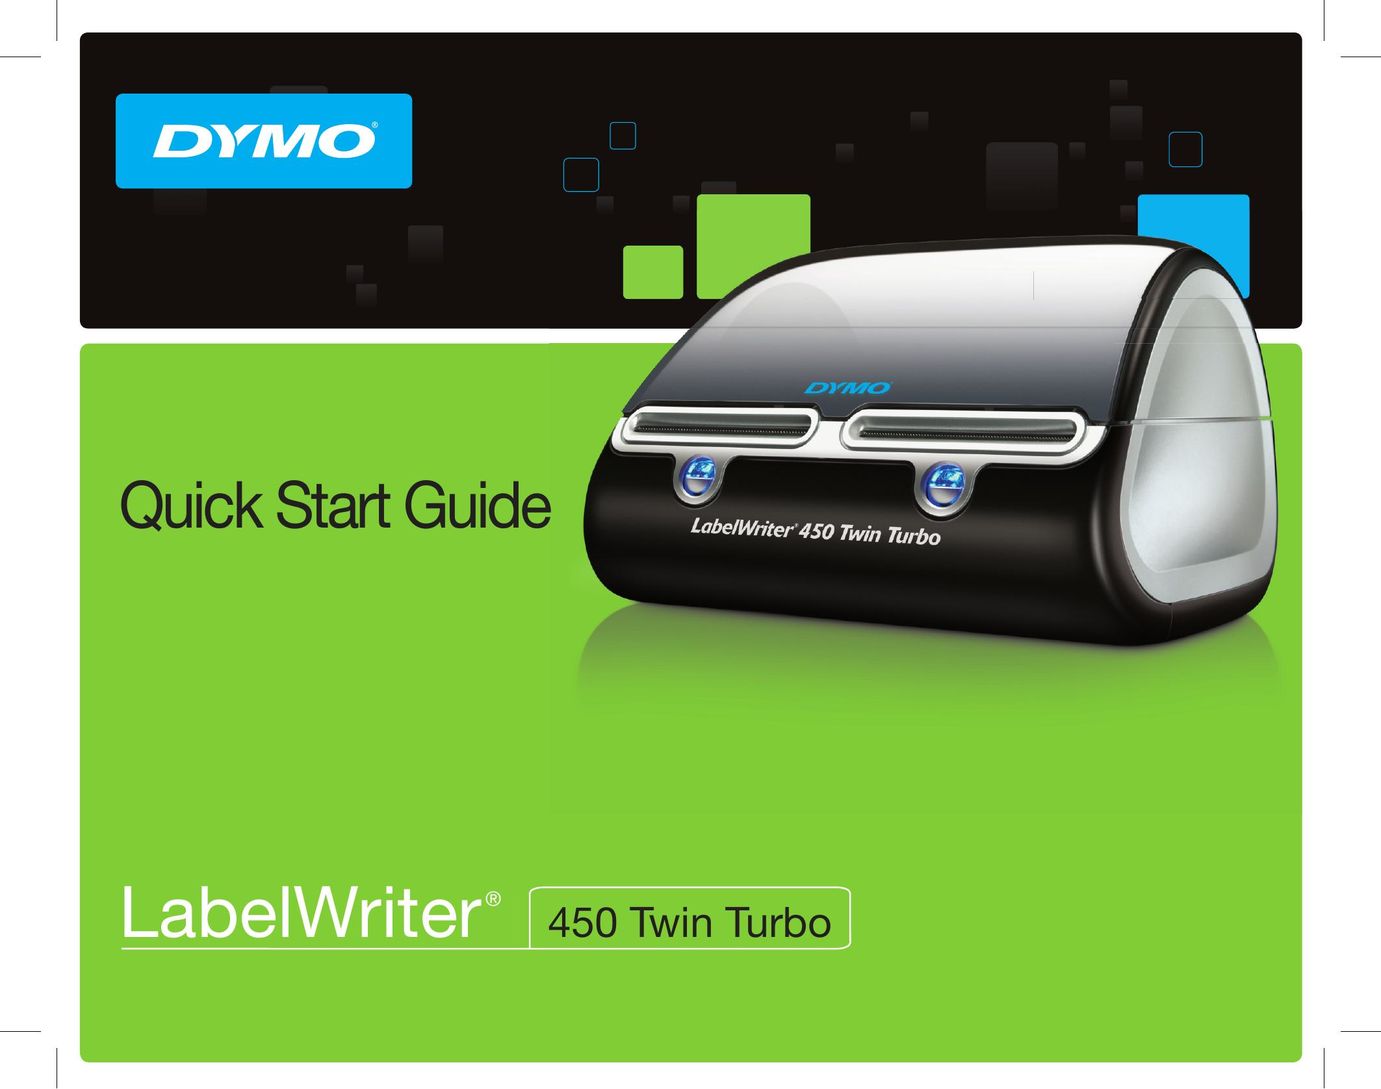 Dymo 450 TWIN TURBO Label Maker User Manual